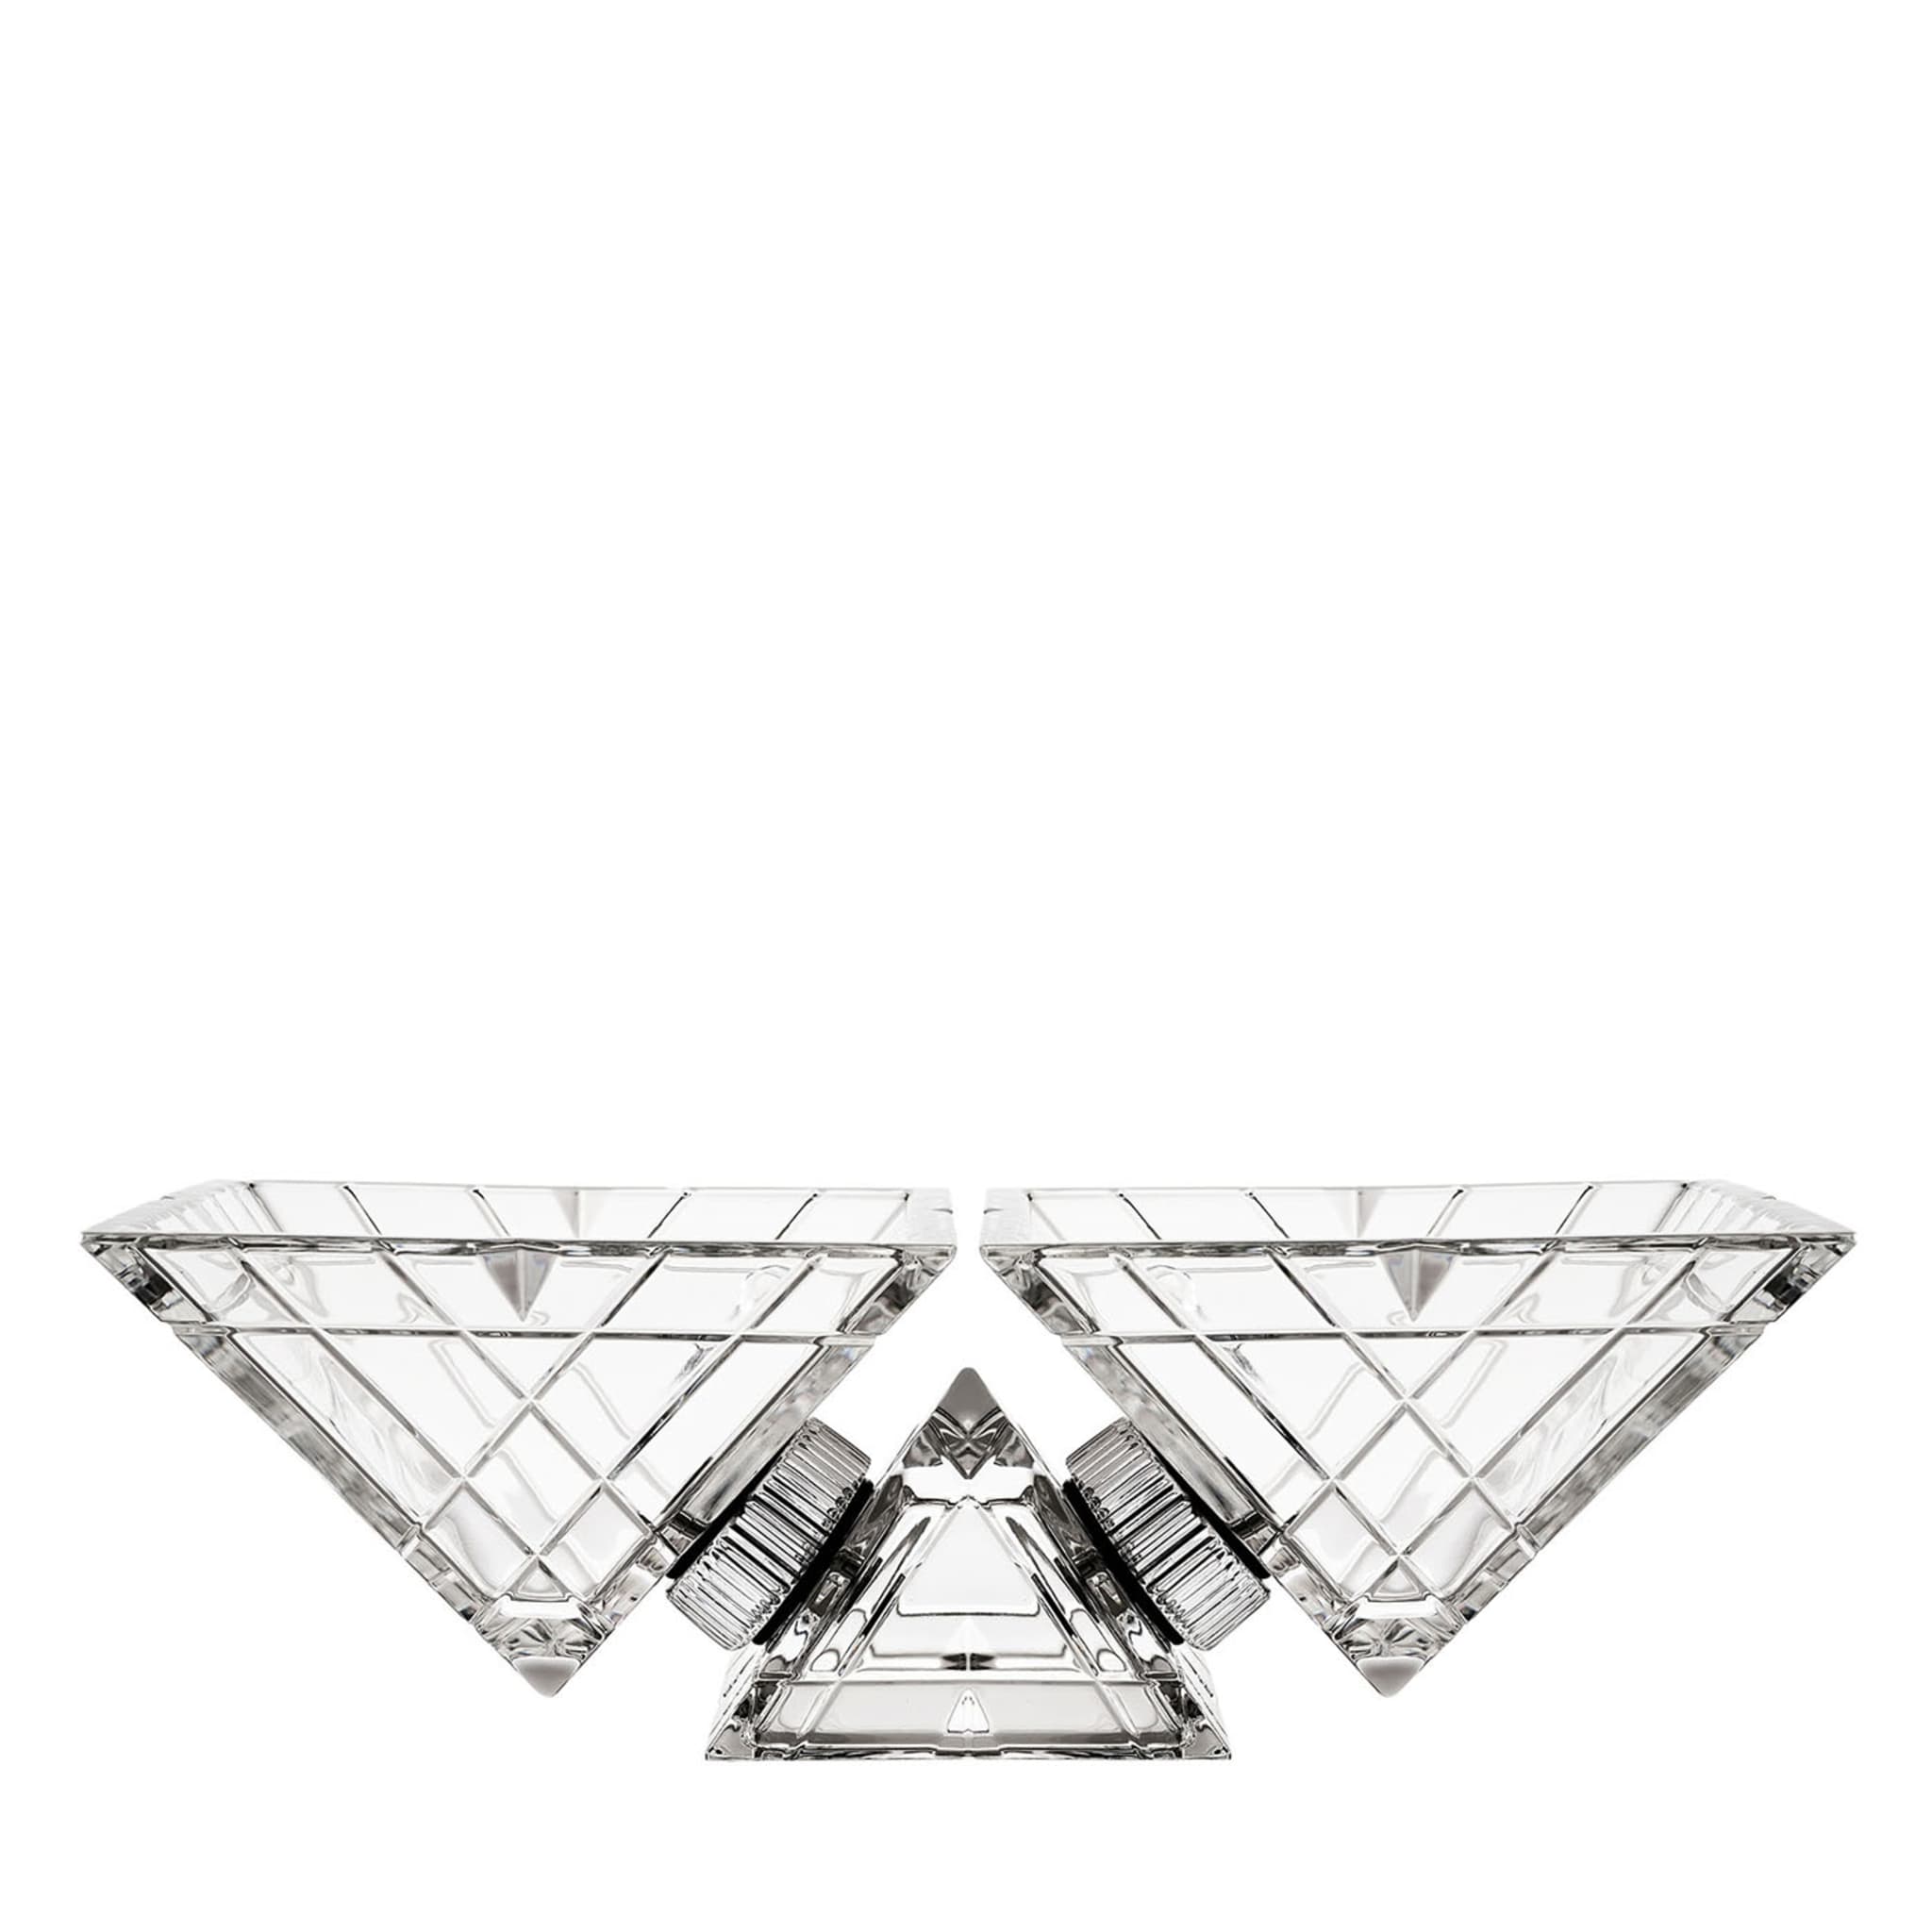 Pyramidion Centrepiece #4 - Main view